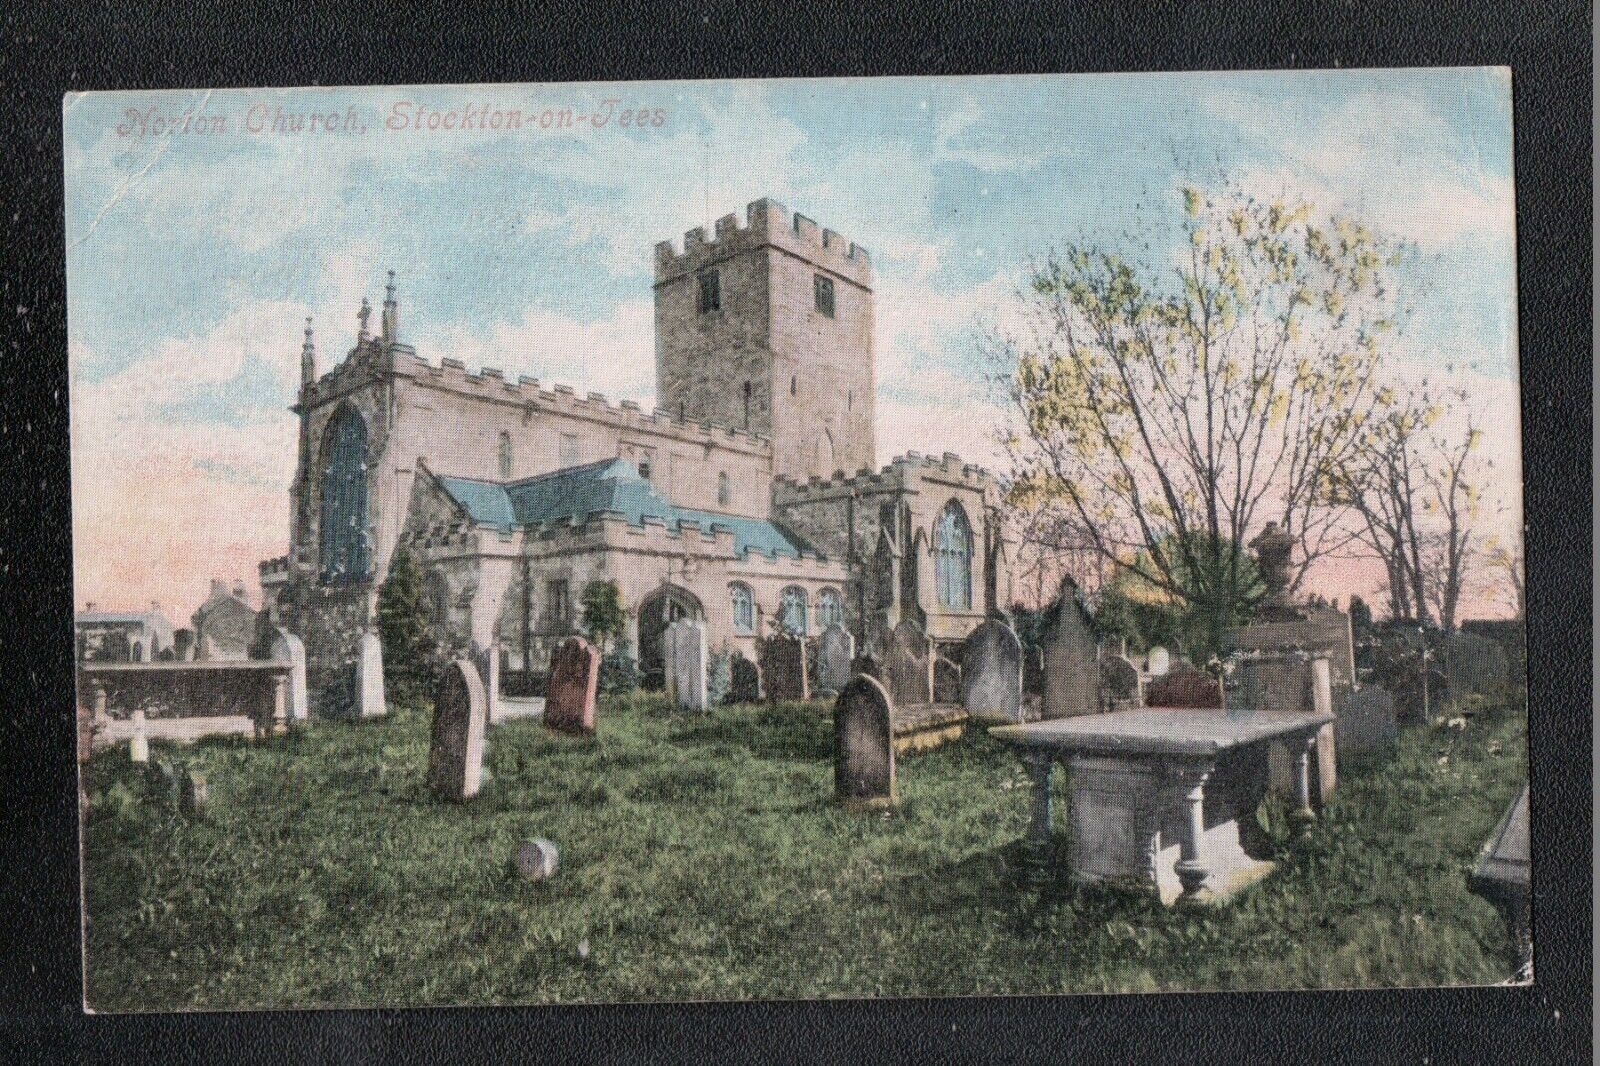 House Clearance - Norton Church Stockton on Tees 1905 Service ~ Co Durham ~ VGC